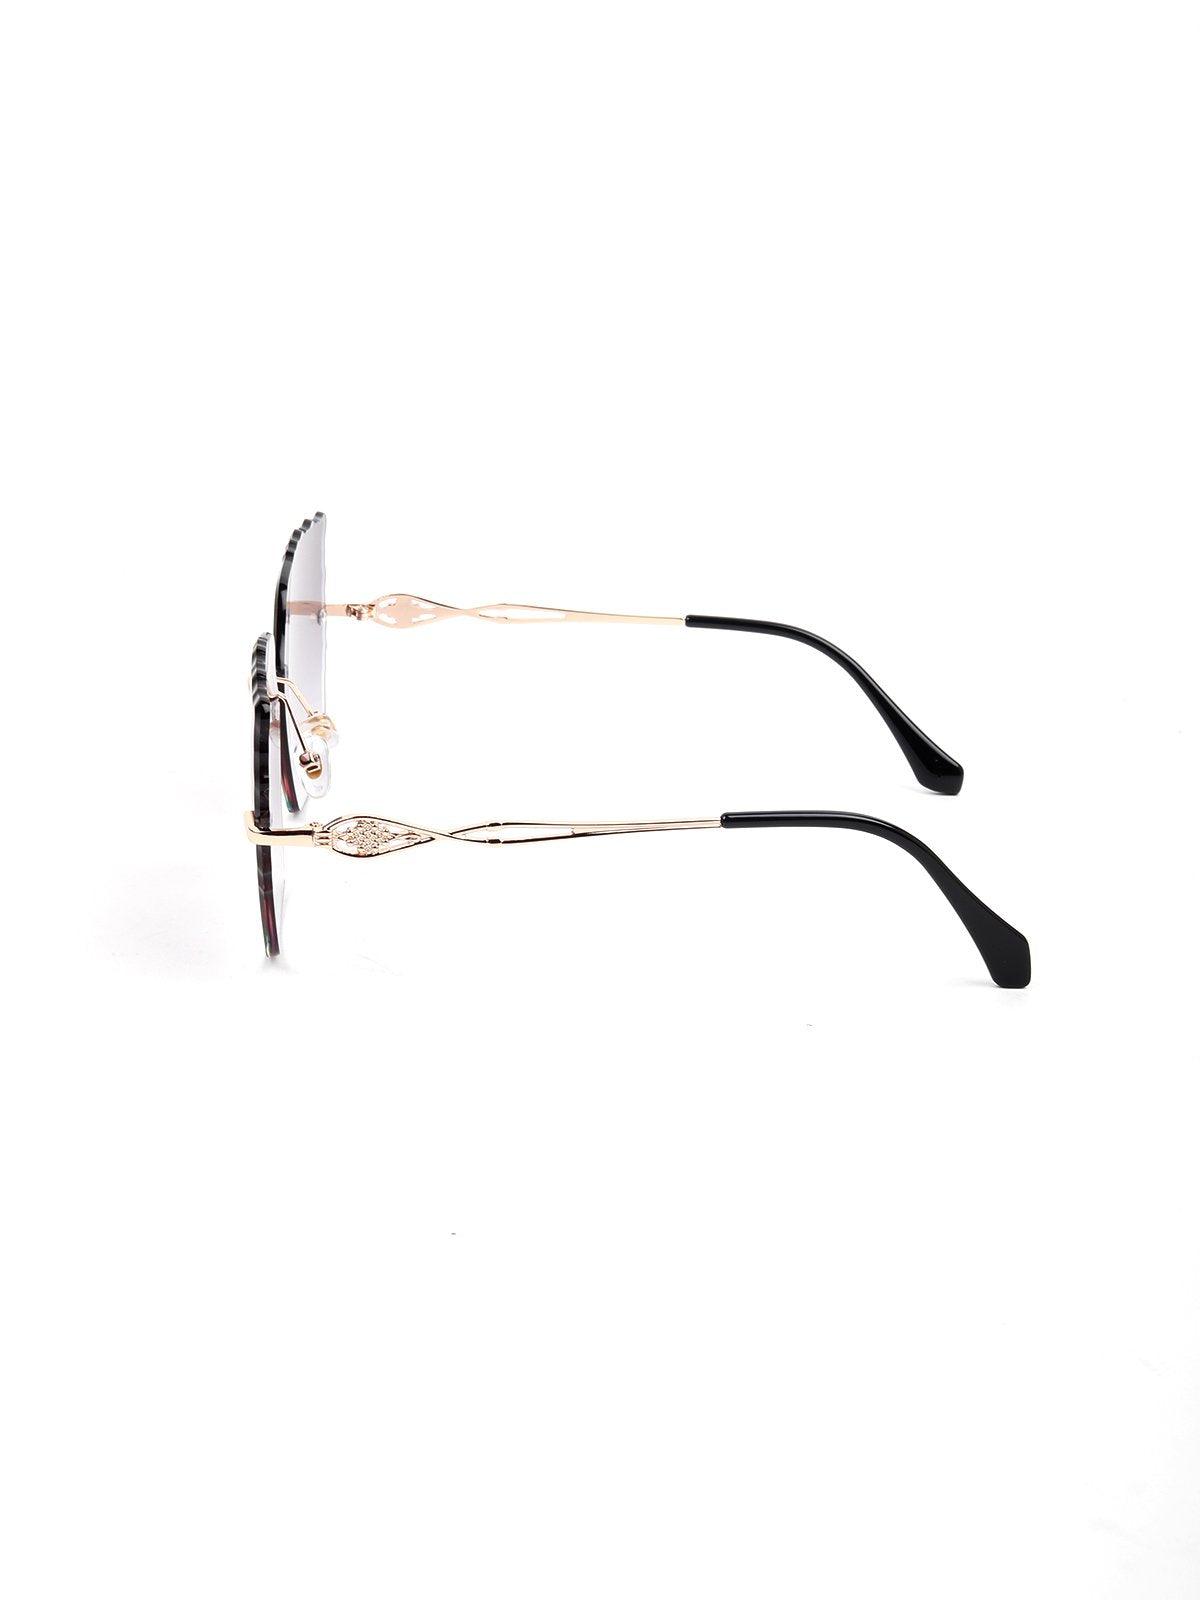 Odette Women Voilet High-Index Acrylic Sunglasses